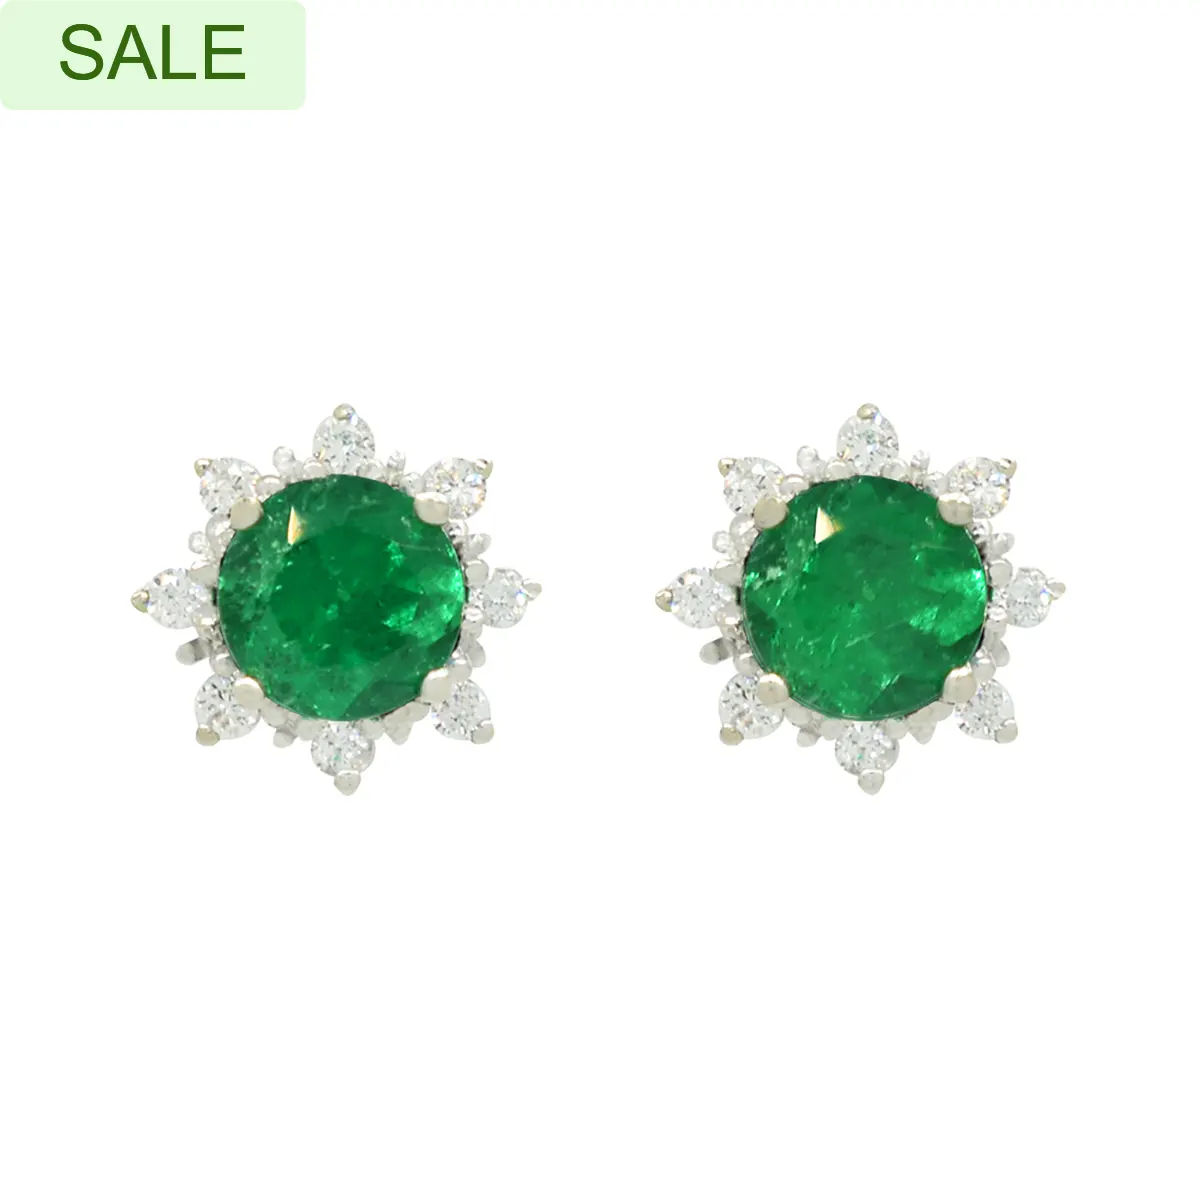 Emerald and Diamond Stud Earrings in 18K White Gold Dark Green Emeralds and Diamond Halo